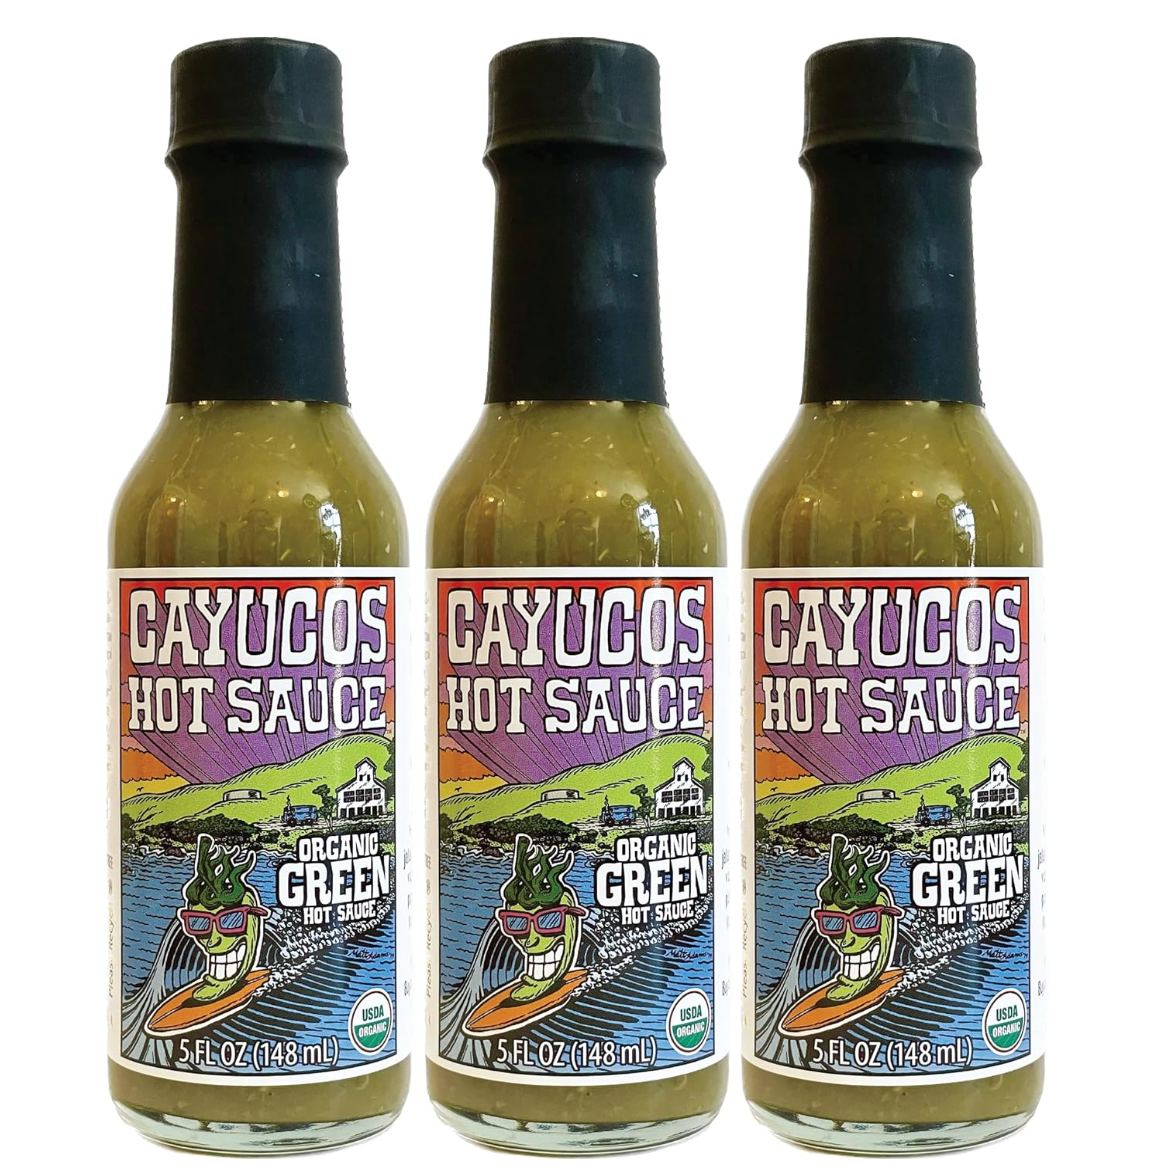 Cayucos Hot Sauce - Organic Green